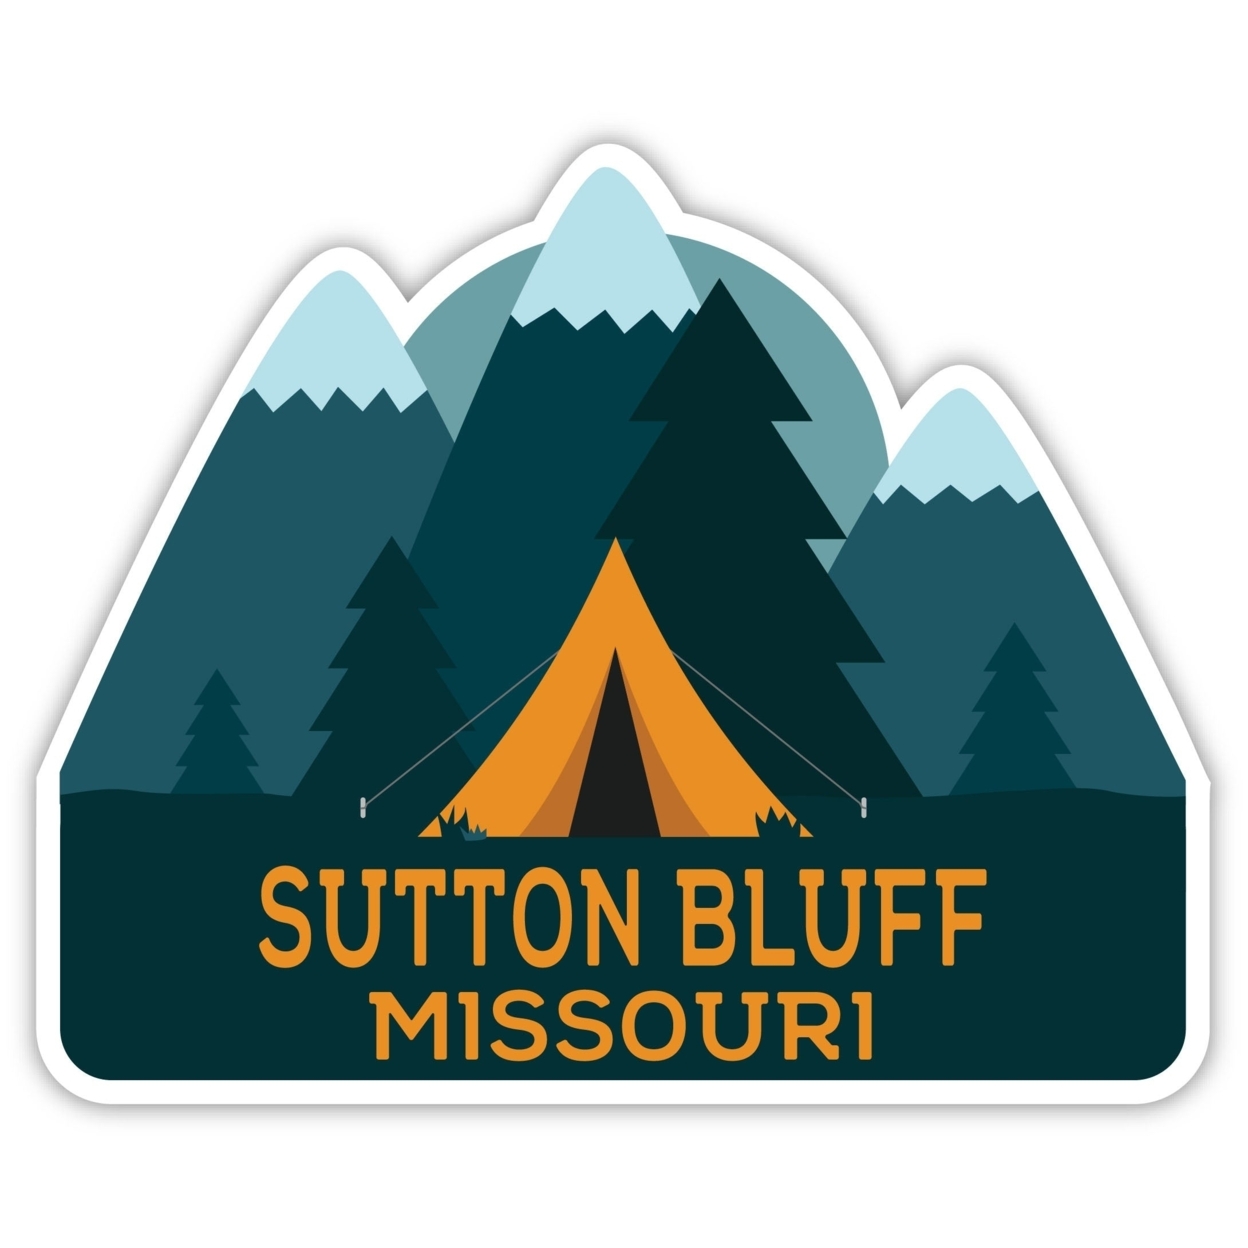 Sutton Bluff Missouri Souvenir Decorative Stickers (Choose Theme And Size) - Single Unit, 4-Inch, Tent